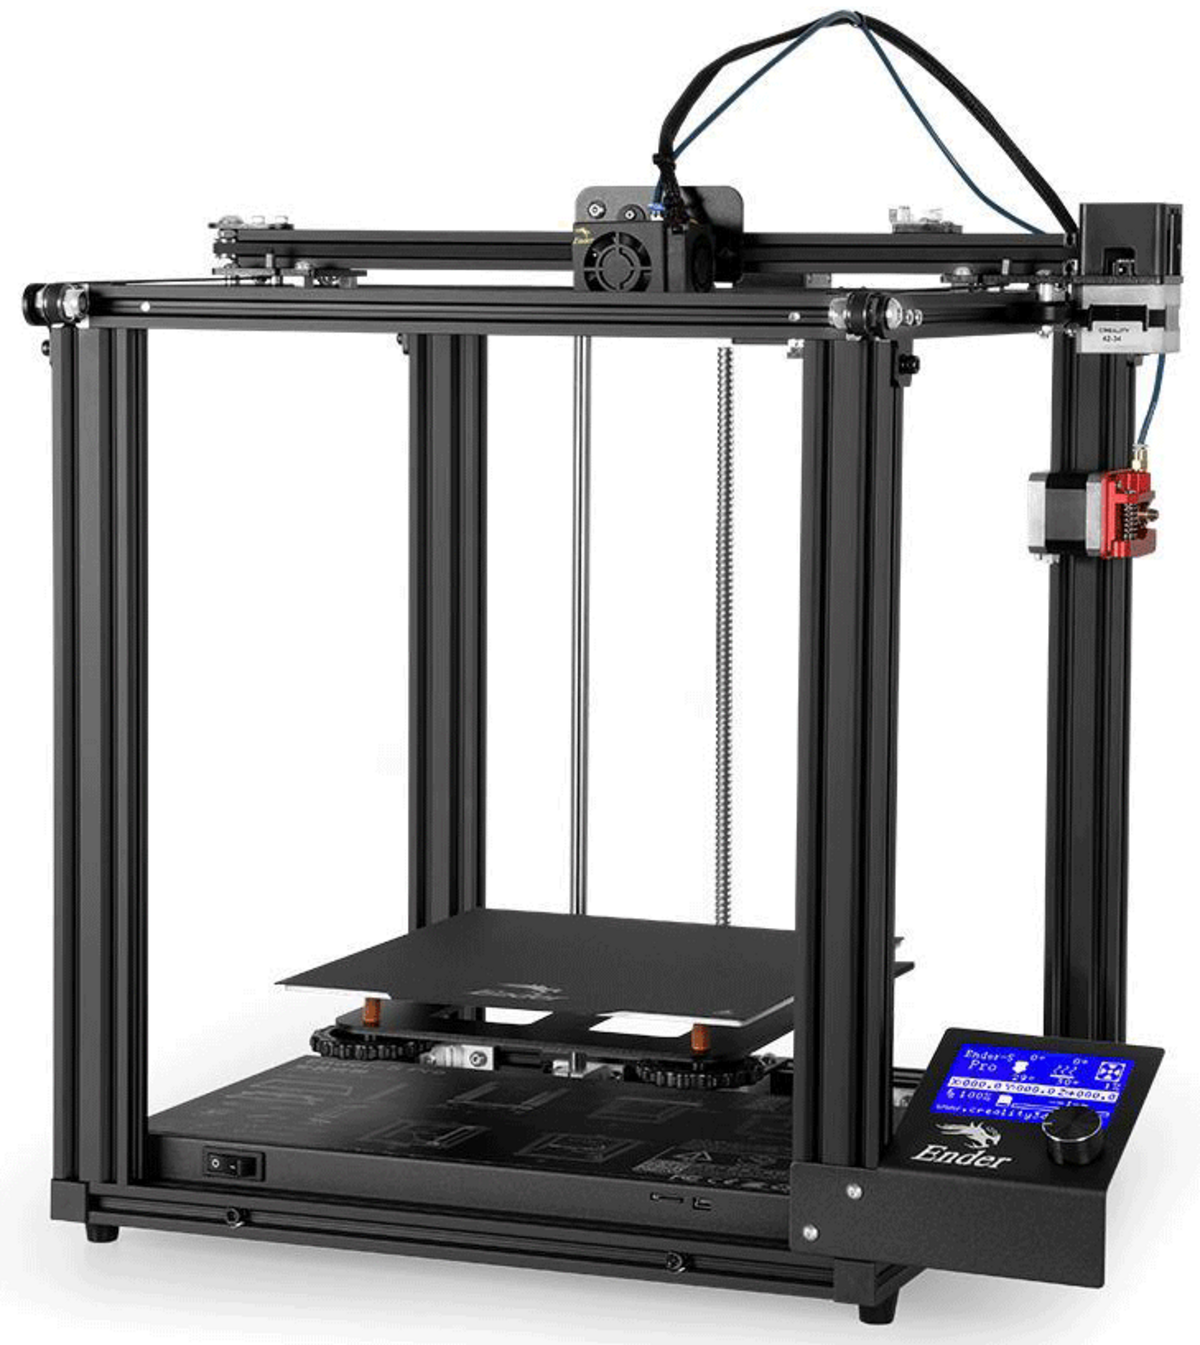 Drucker bouwvolume CREALITY - Pro 3D 220x220x300 FDM printer 3D 5 Creality Ender